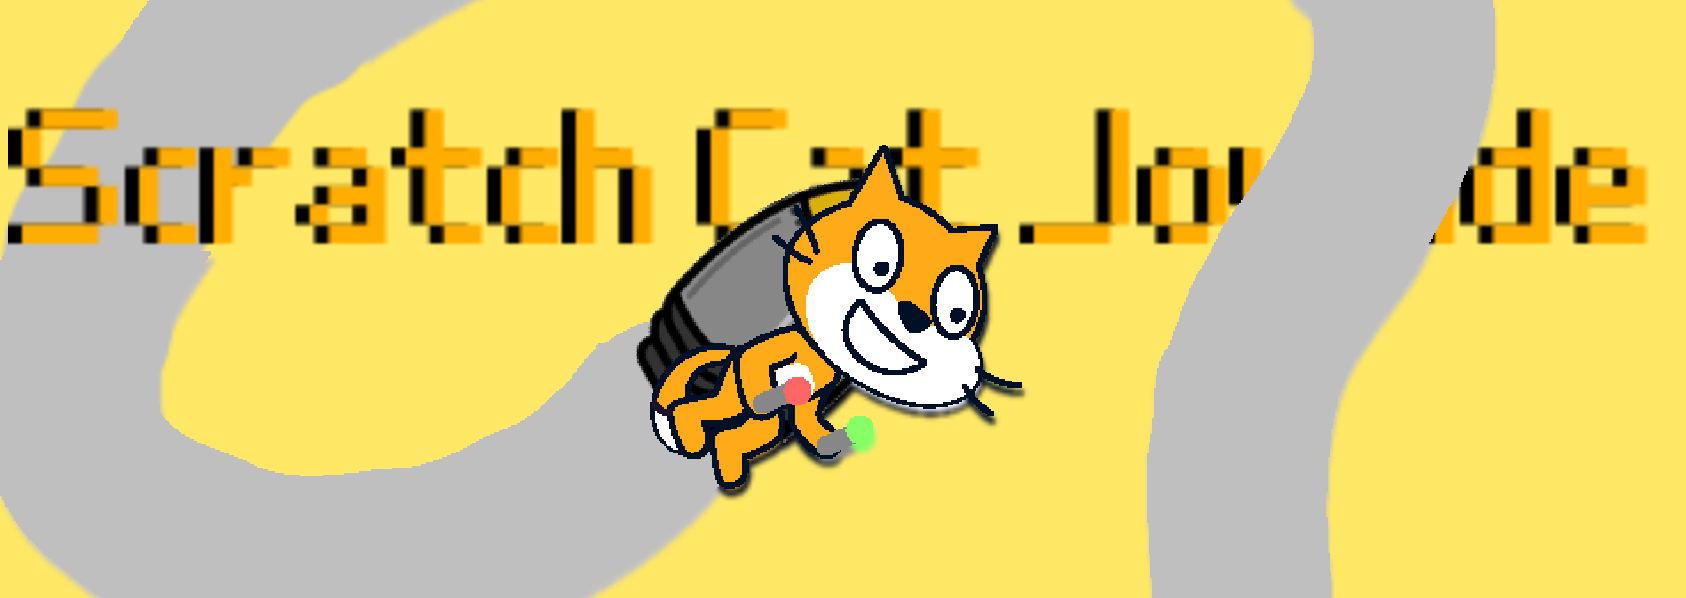 Scratch Cat Joyride!